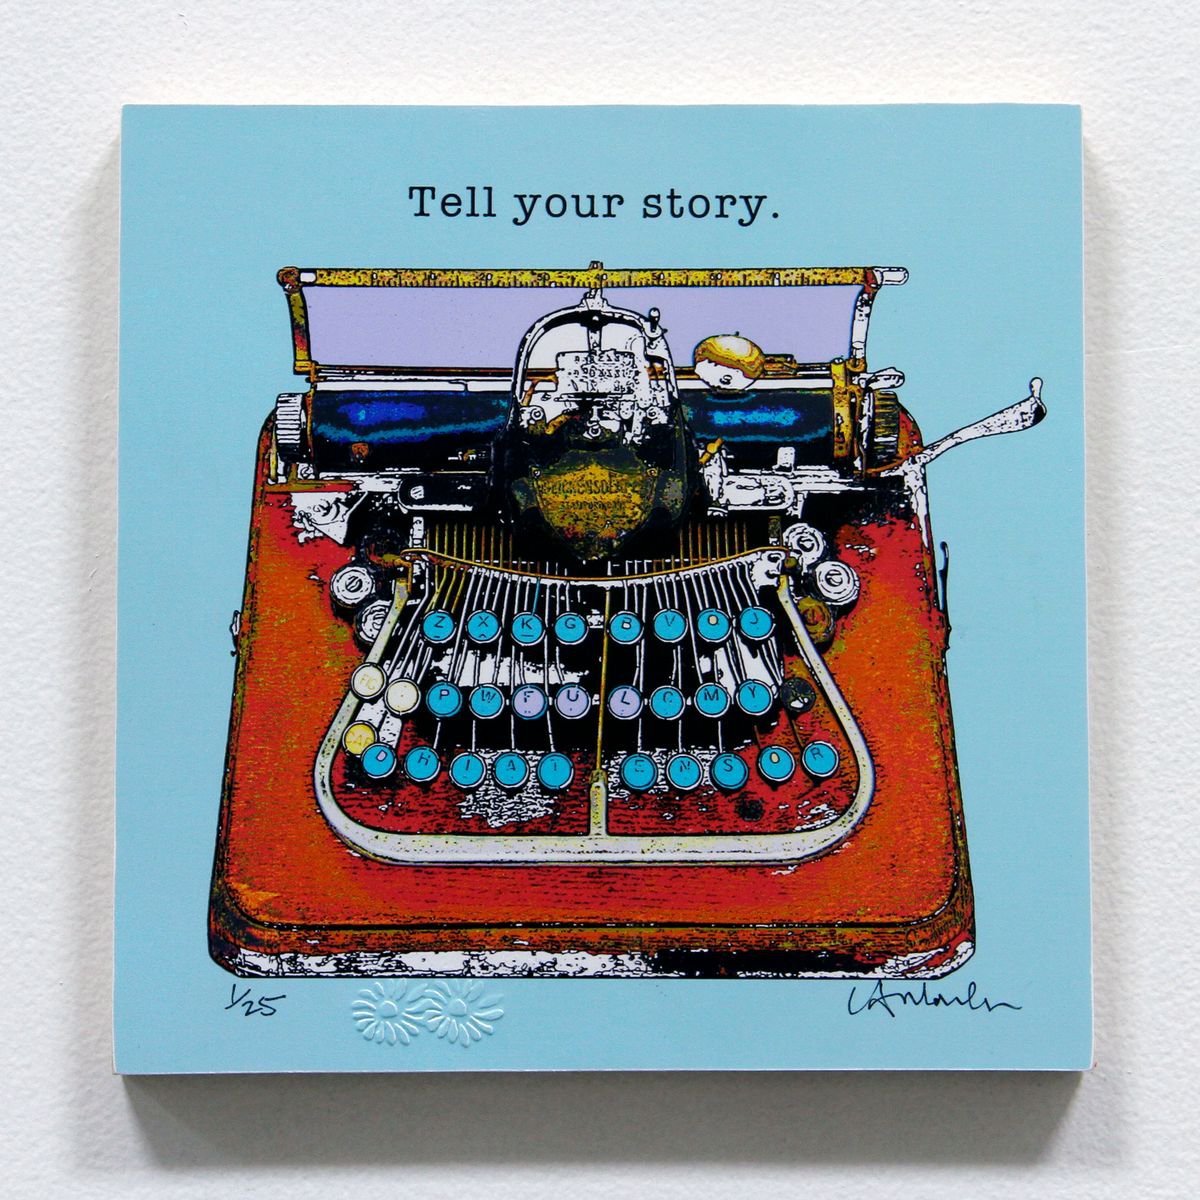 Original Vintage Typewriter Art - Tell your story. by LA Marler